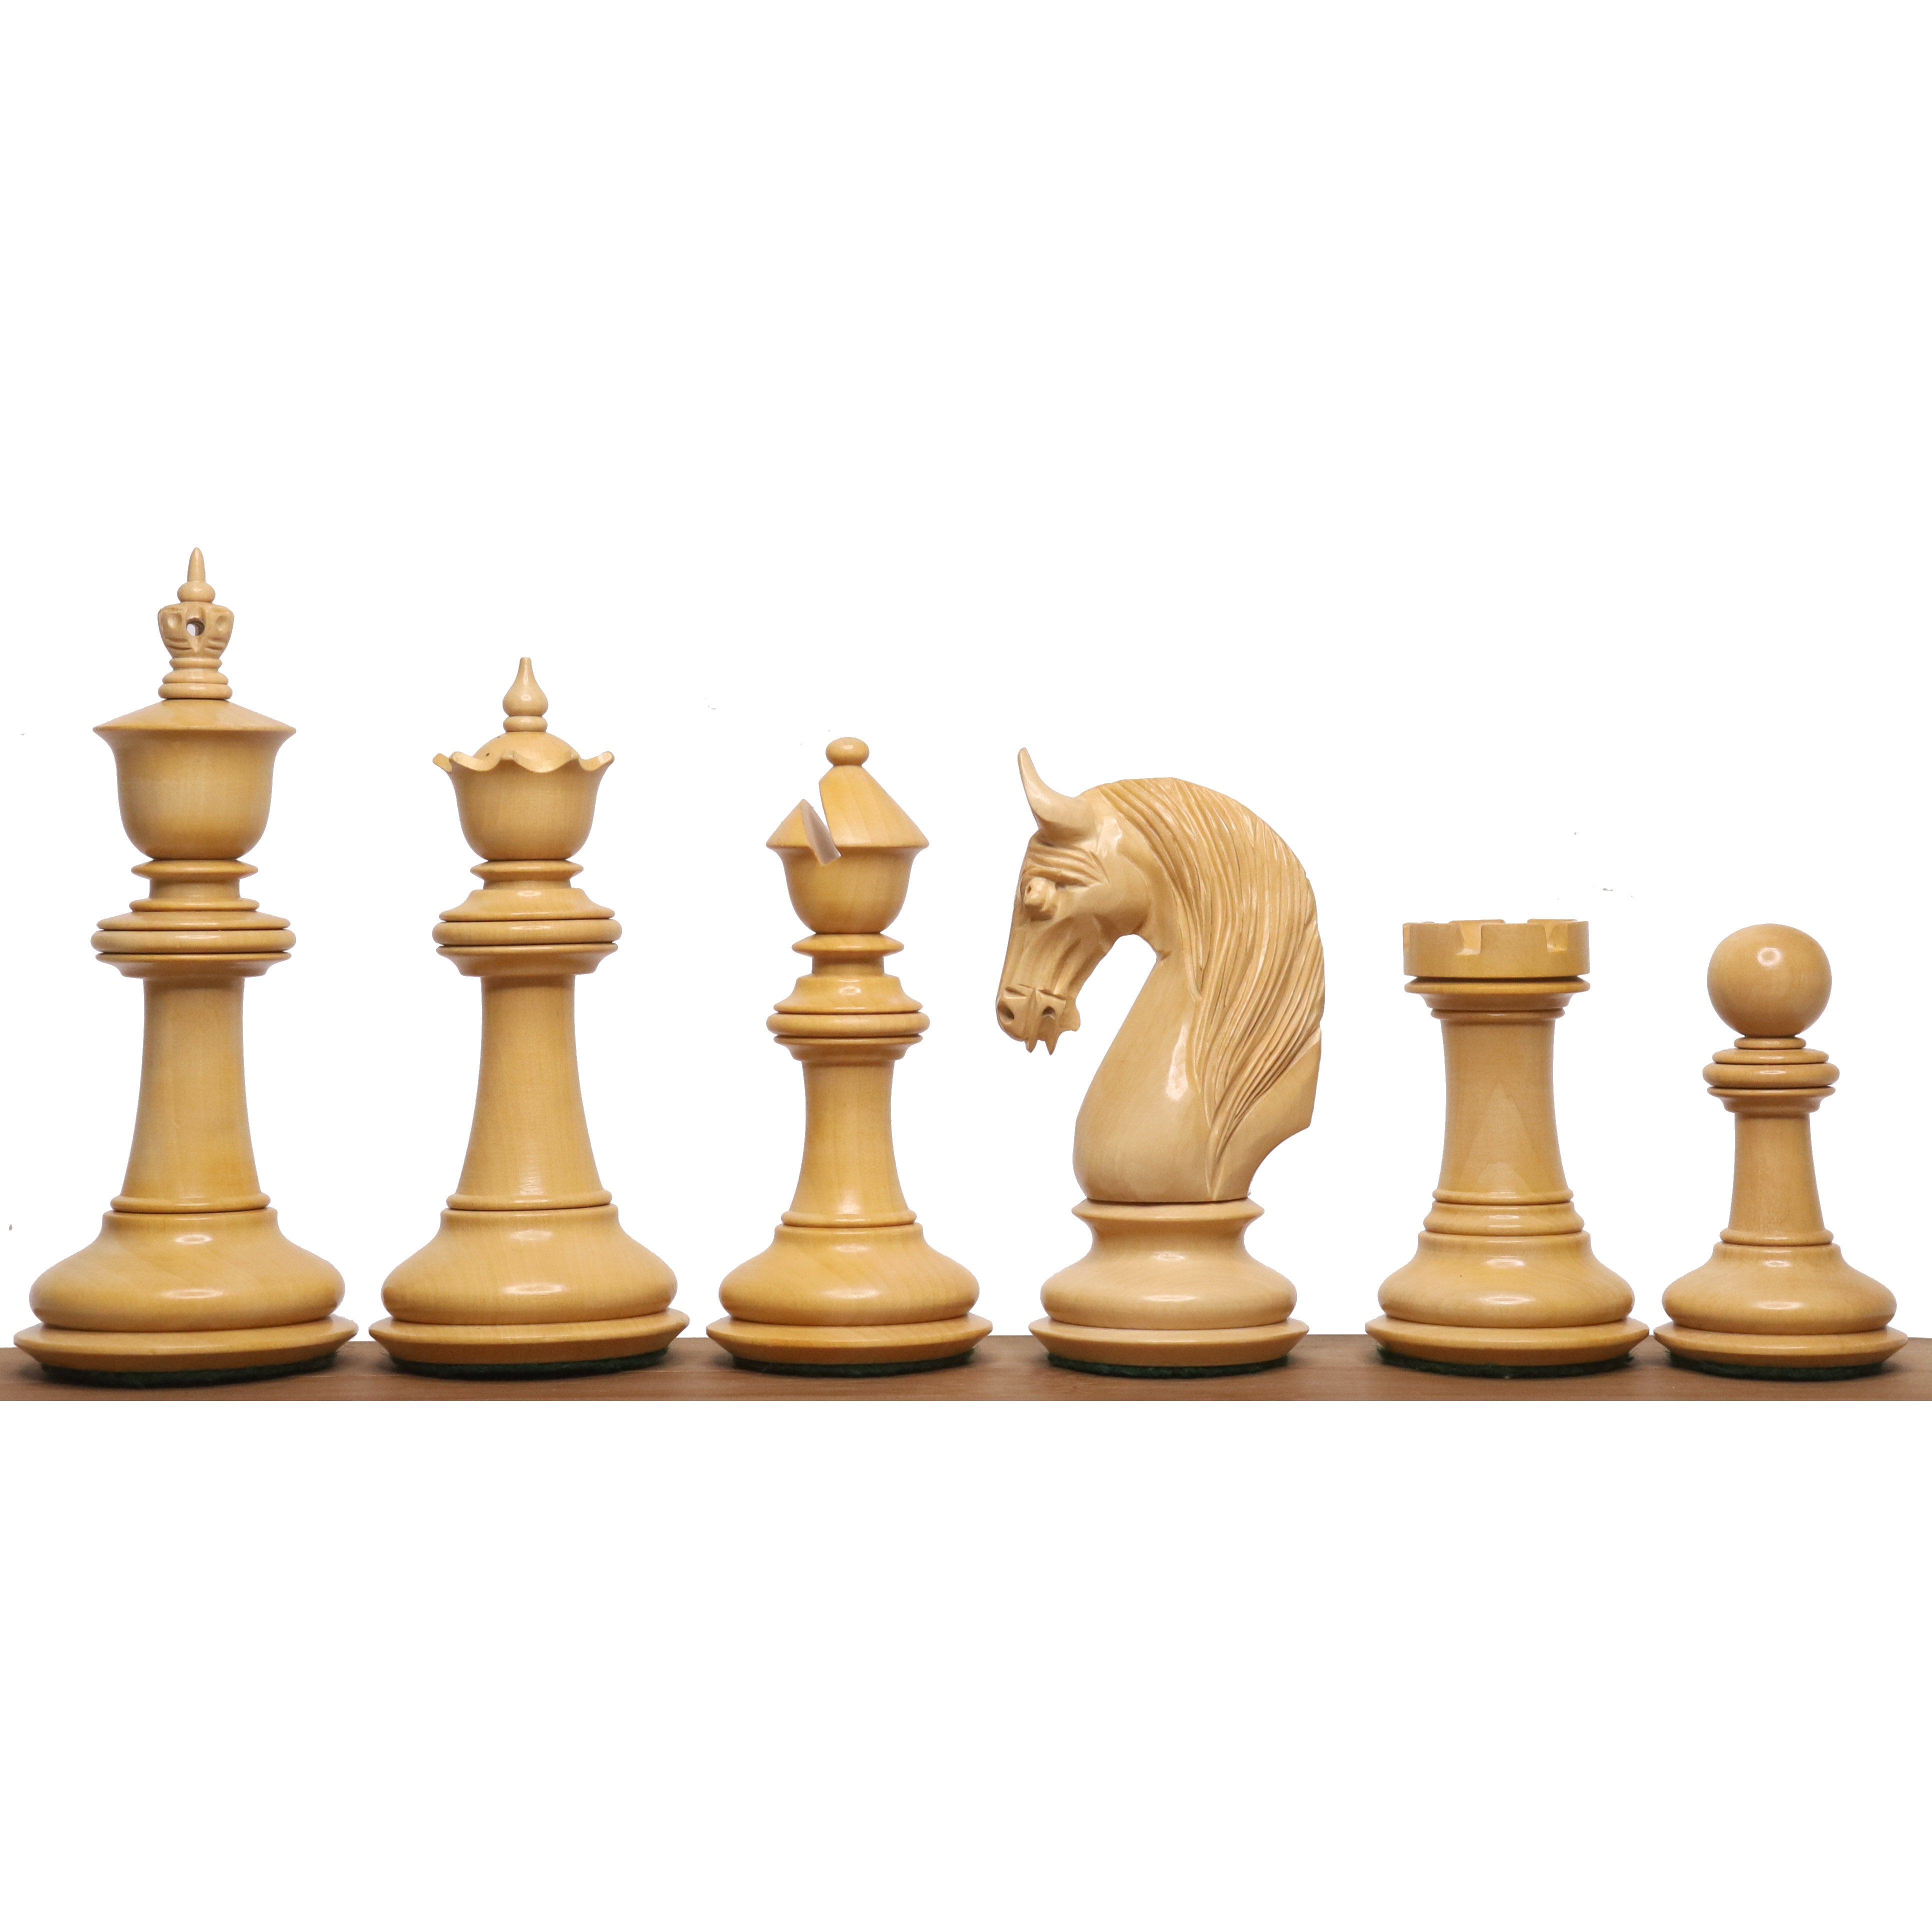 4.6" Bath Luxury Staunton Chess Pieces Only Set - Ebony Wood - Triple Weight